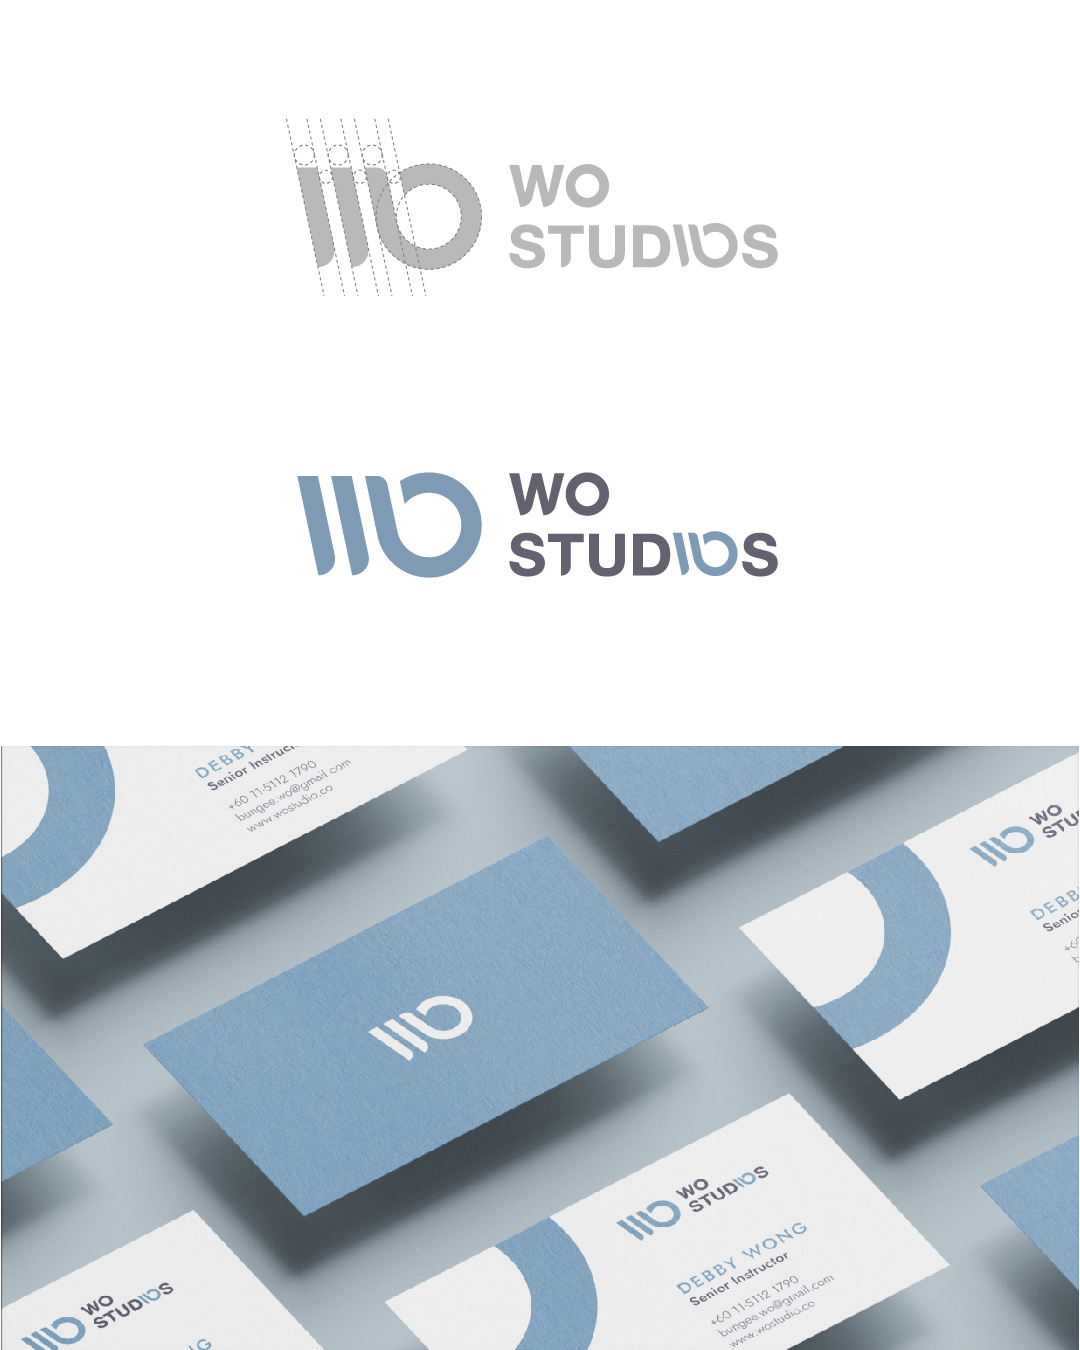 Logo Design - WO Studios